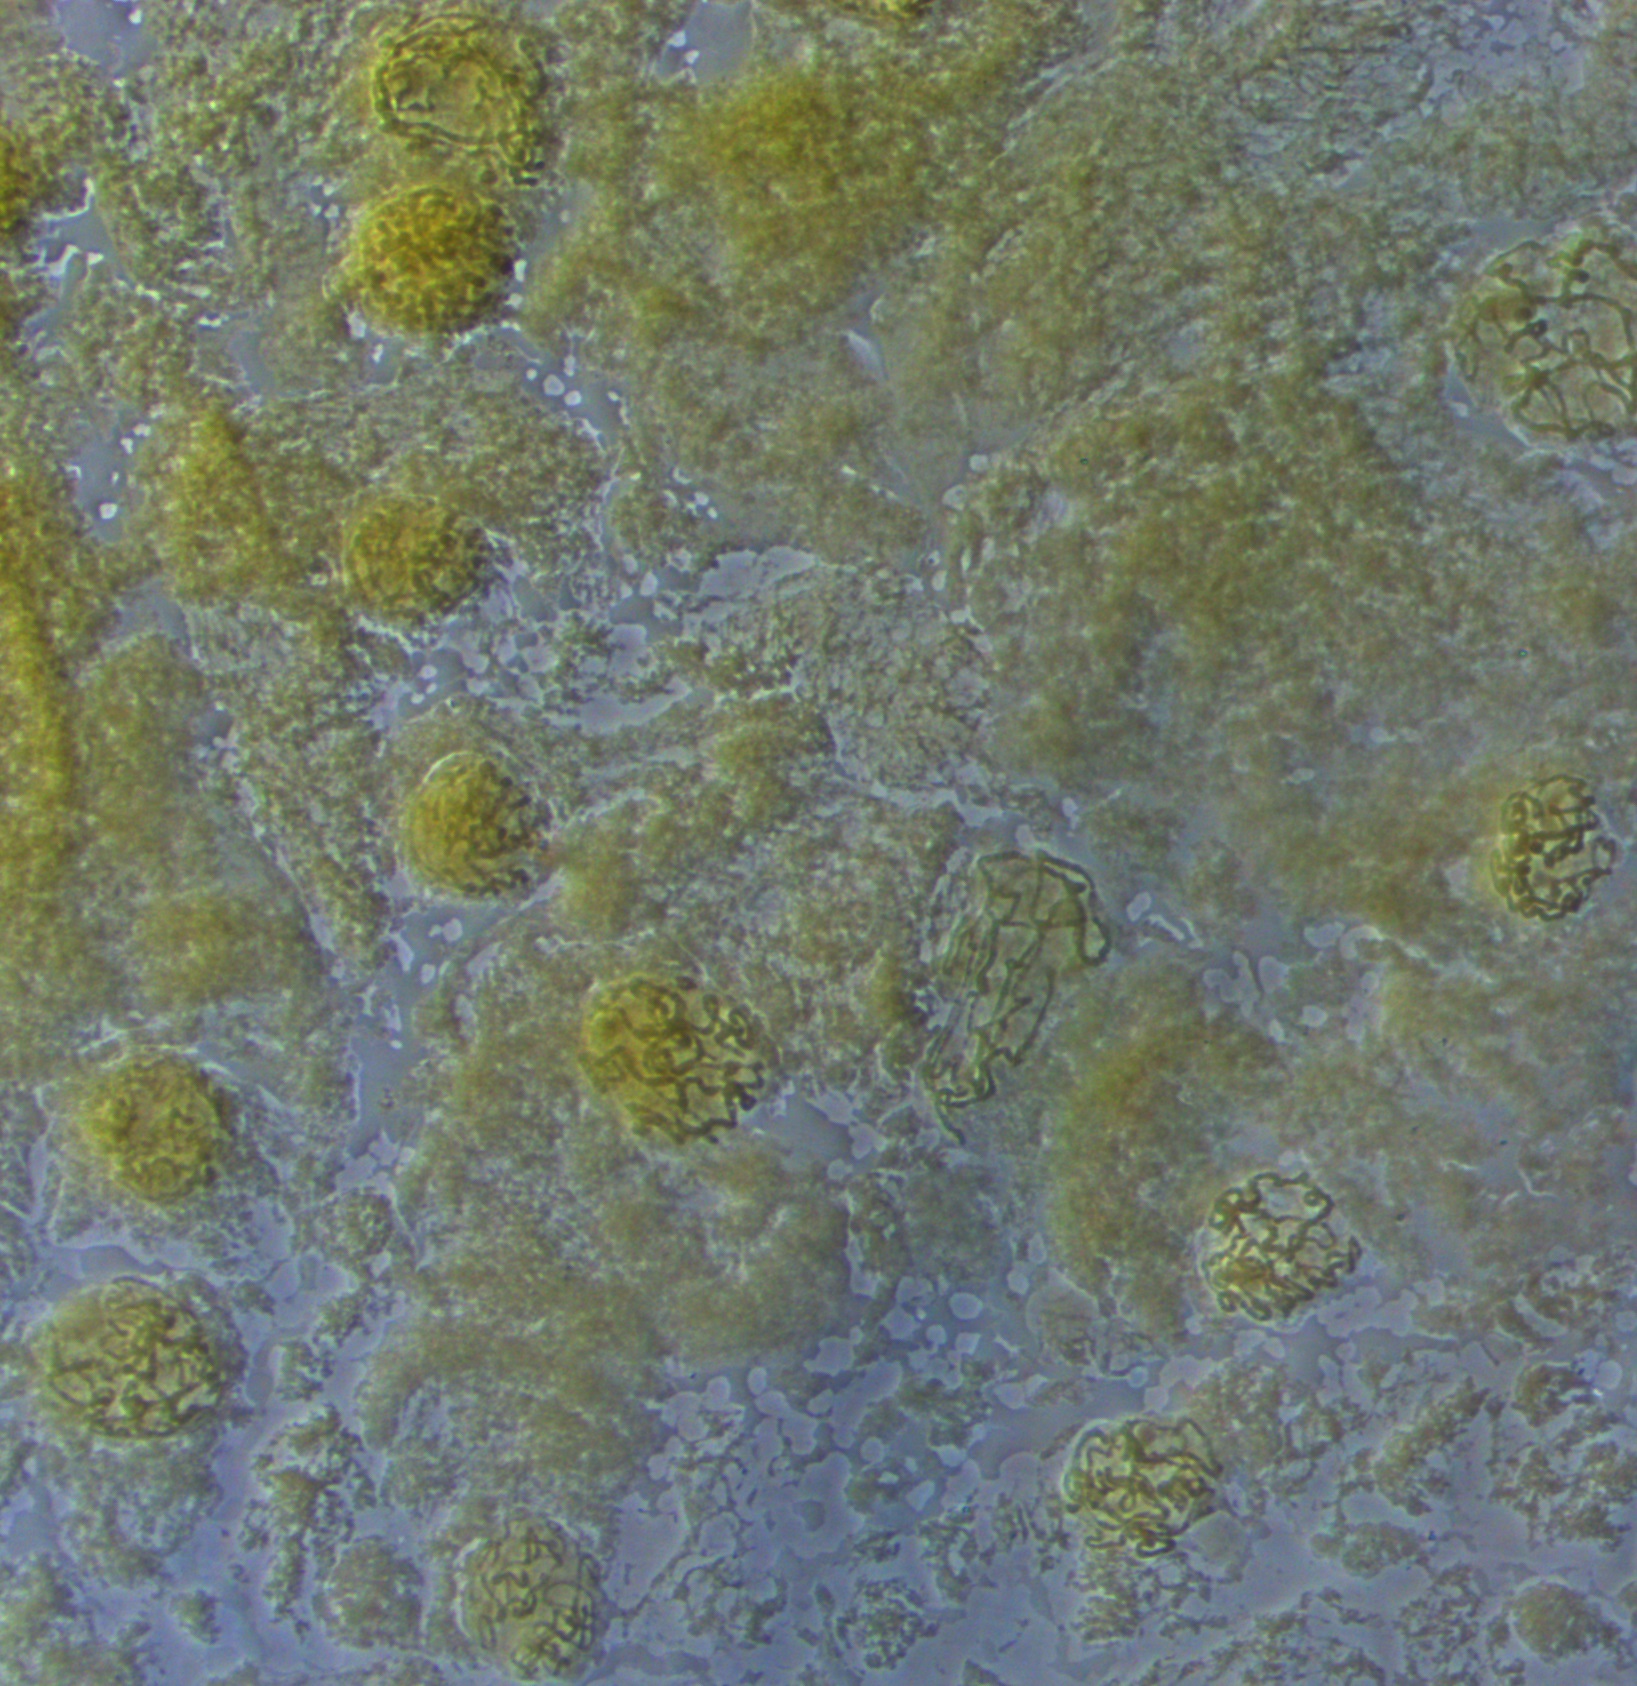 dmel-polytene-2014-07-28-12-06-44-nuclei